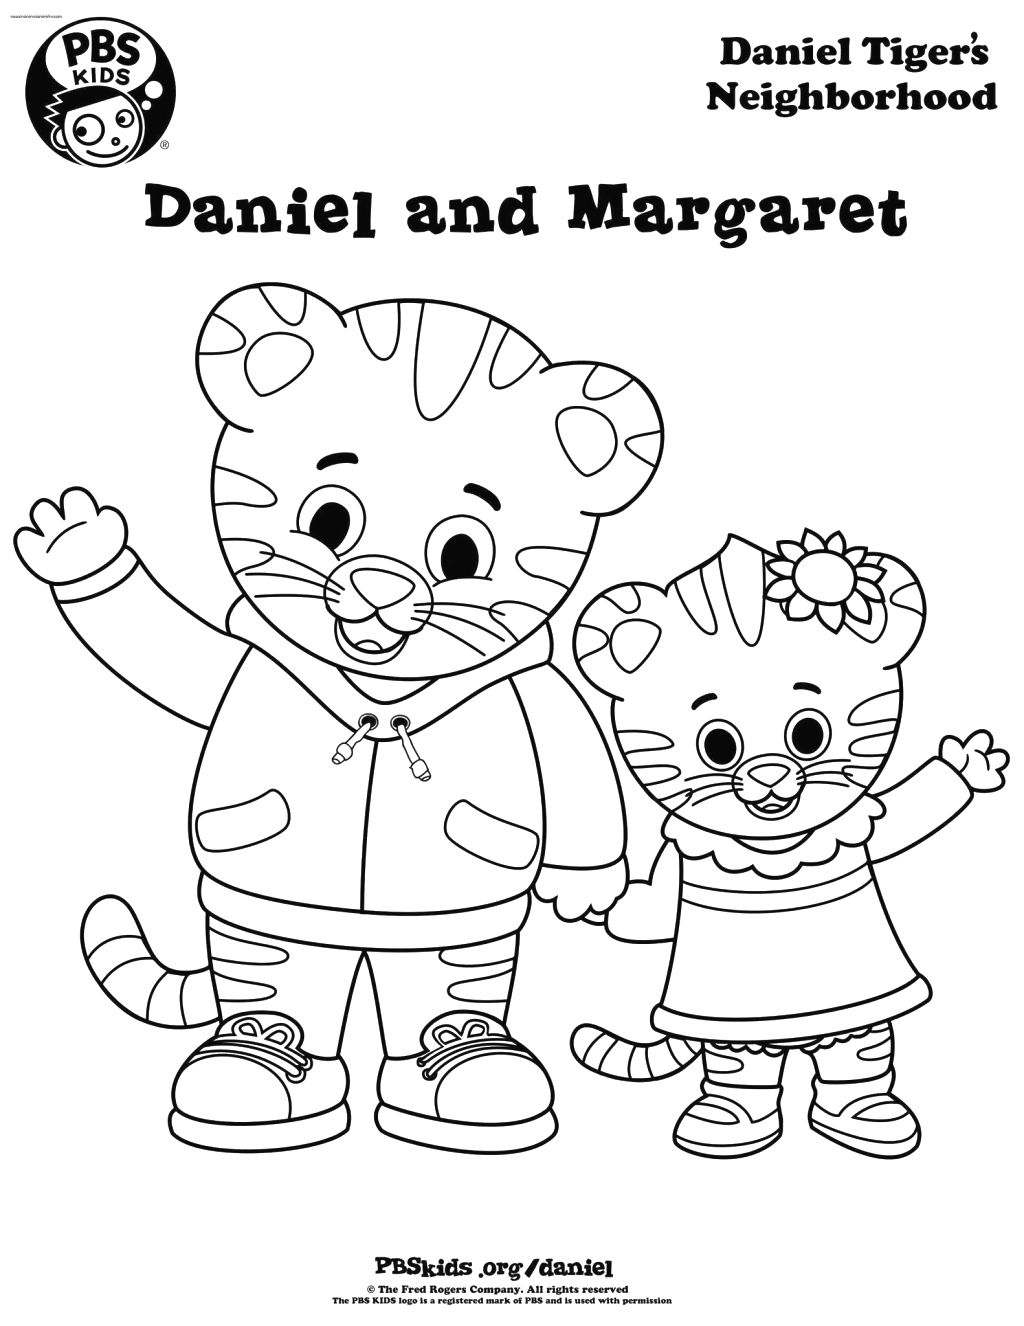 Daniel and Margaret - Daniel Tiger's Neighborhood Coloring Page